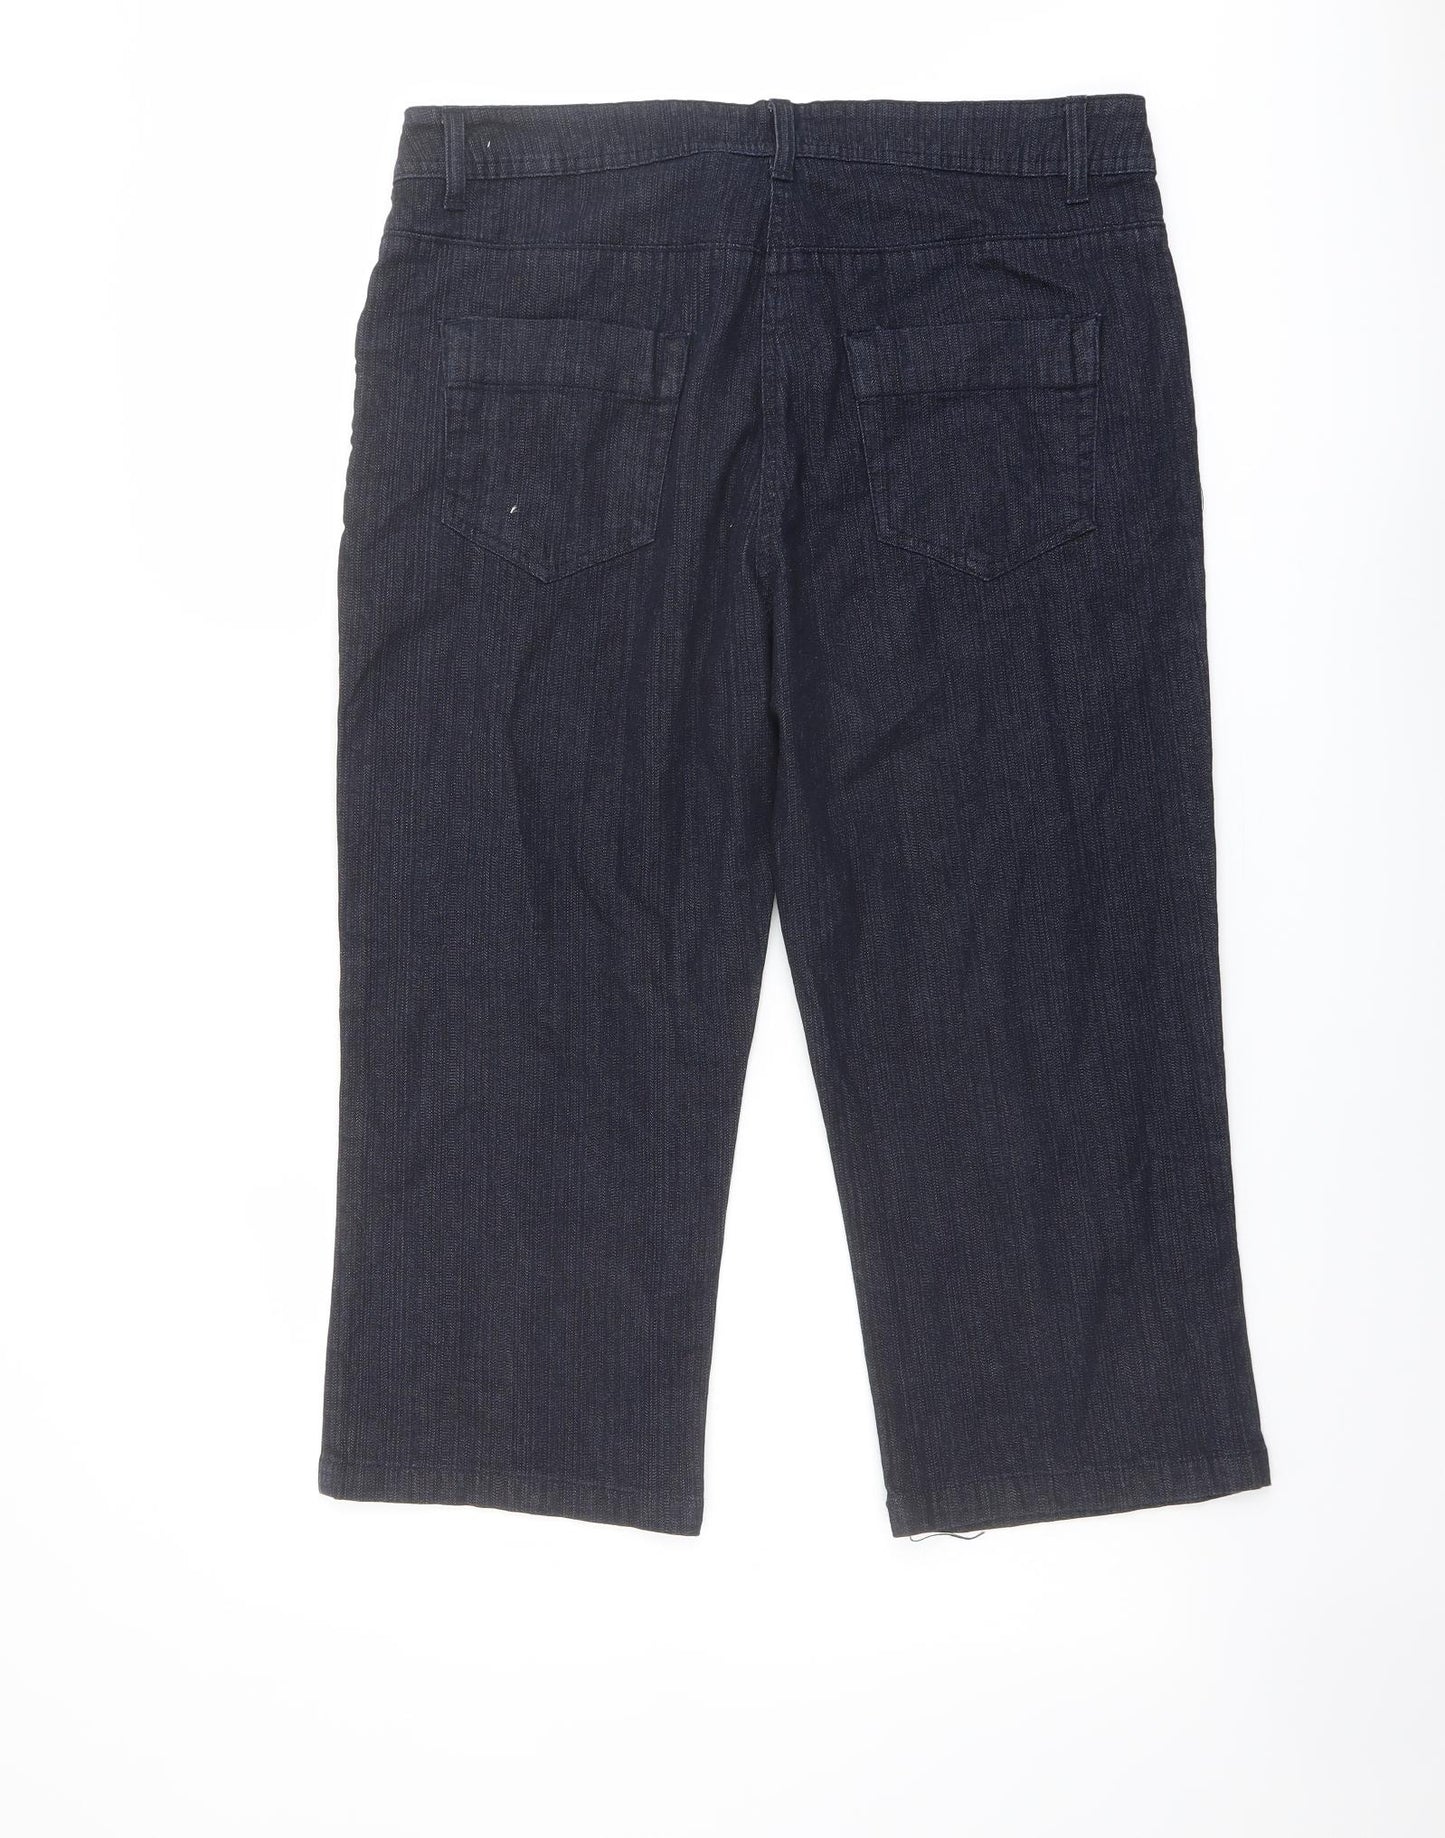 Platform Womens Blue Cotton Straight Jeans Size 16 L21 in Regular Button